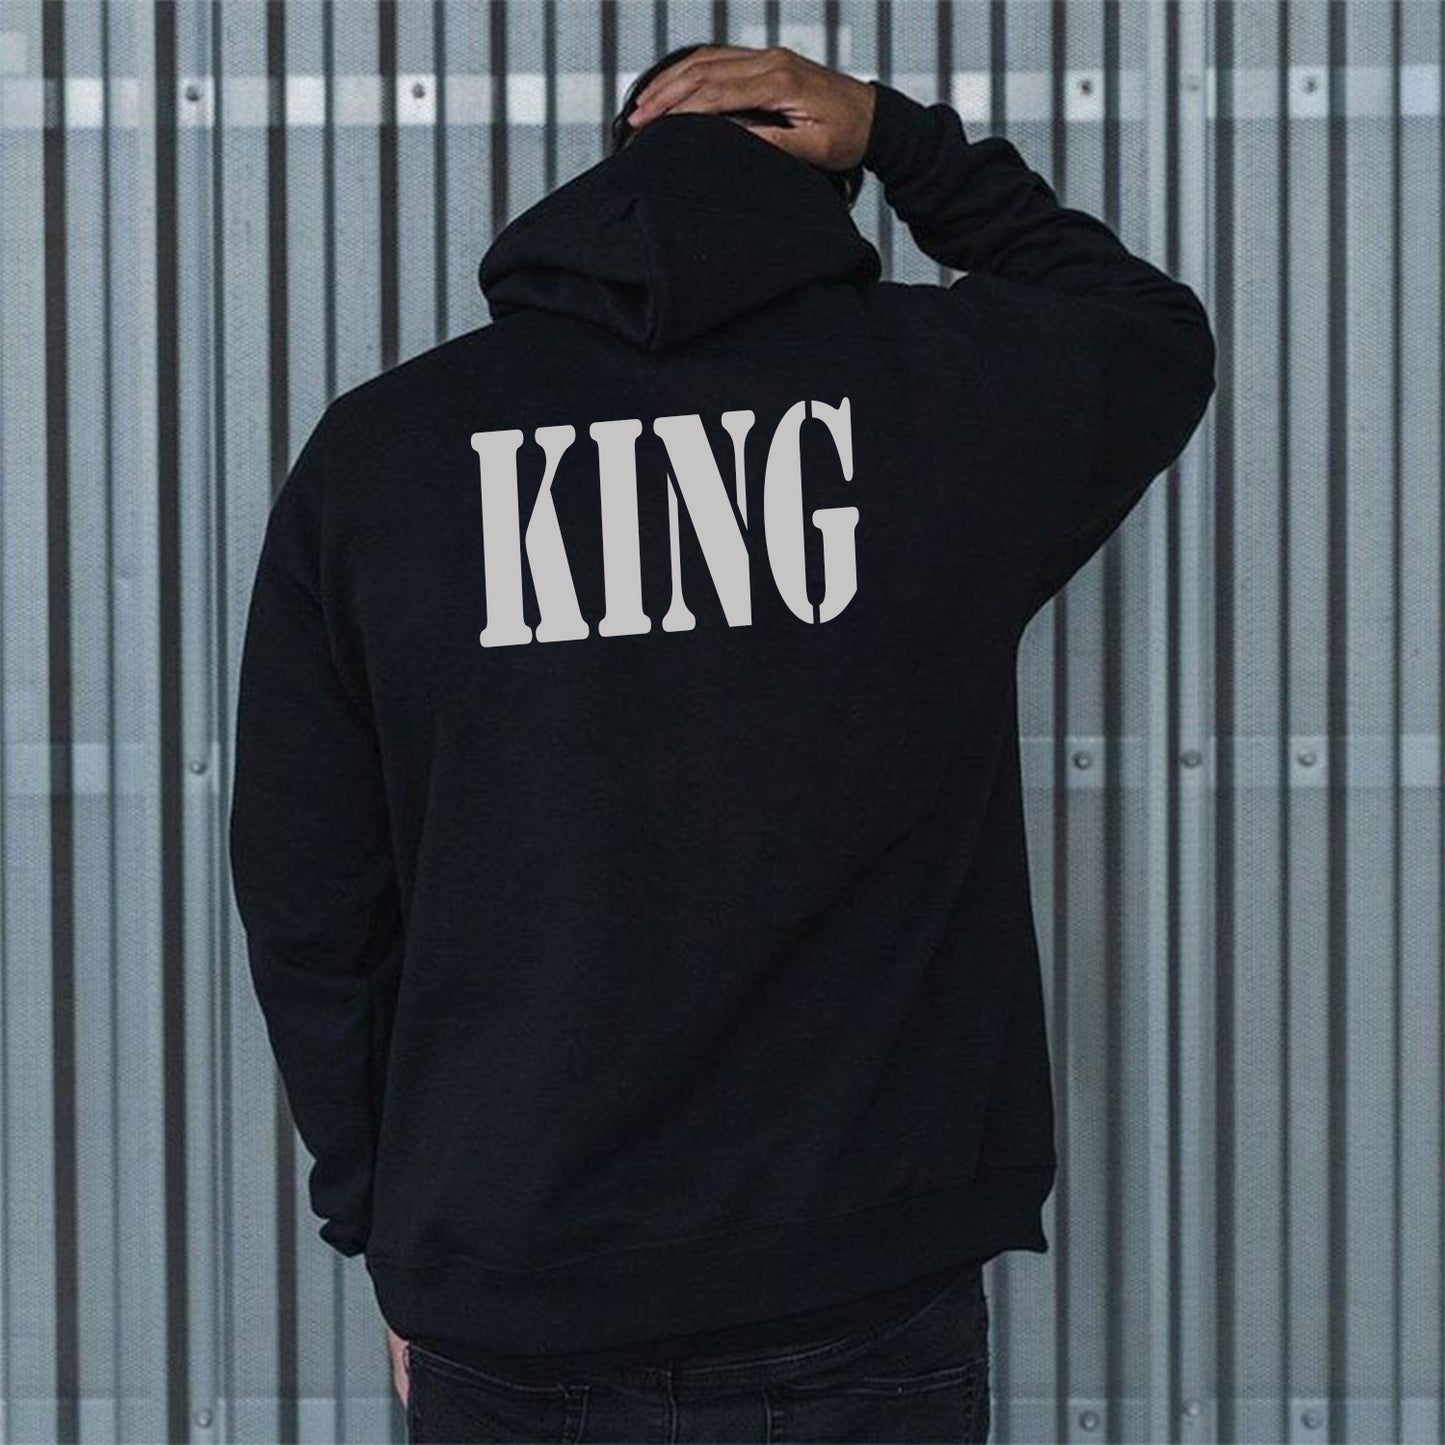 KING Hooded Long Sleeve Men's Sweatshirt